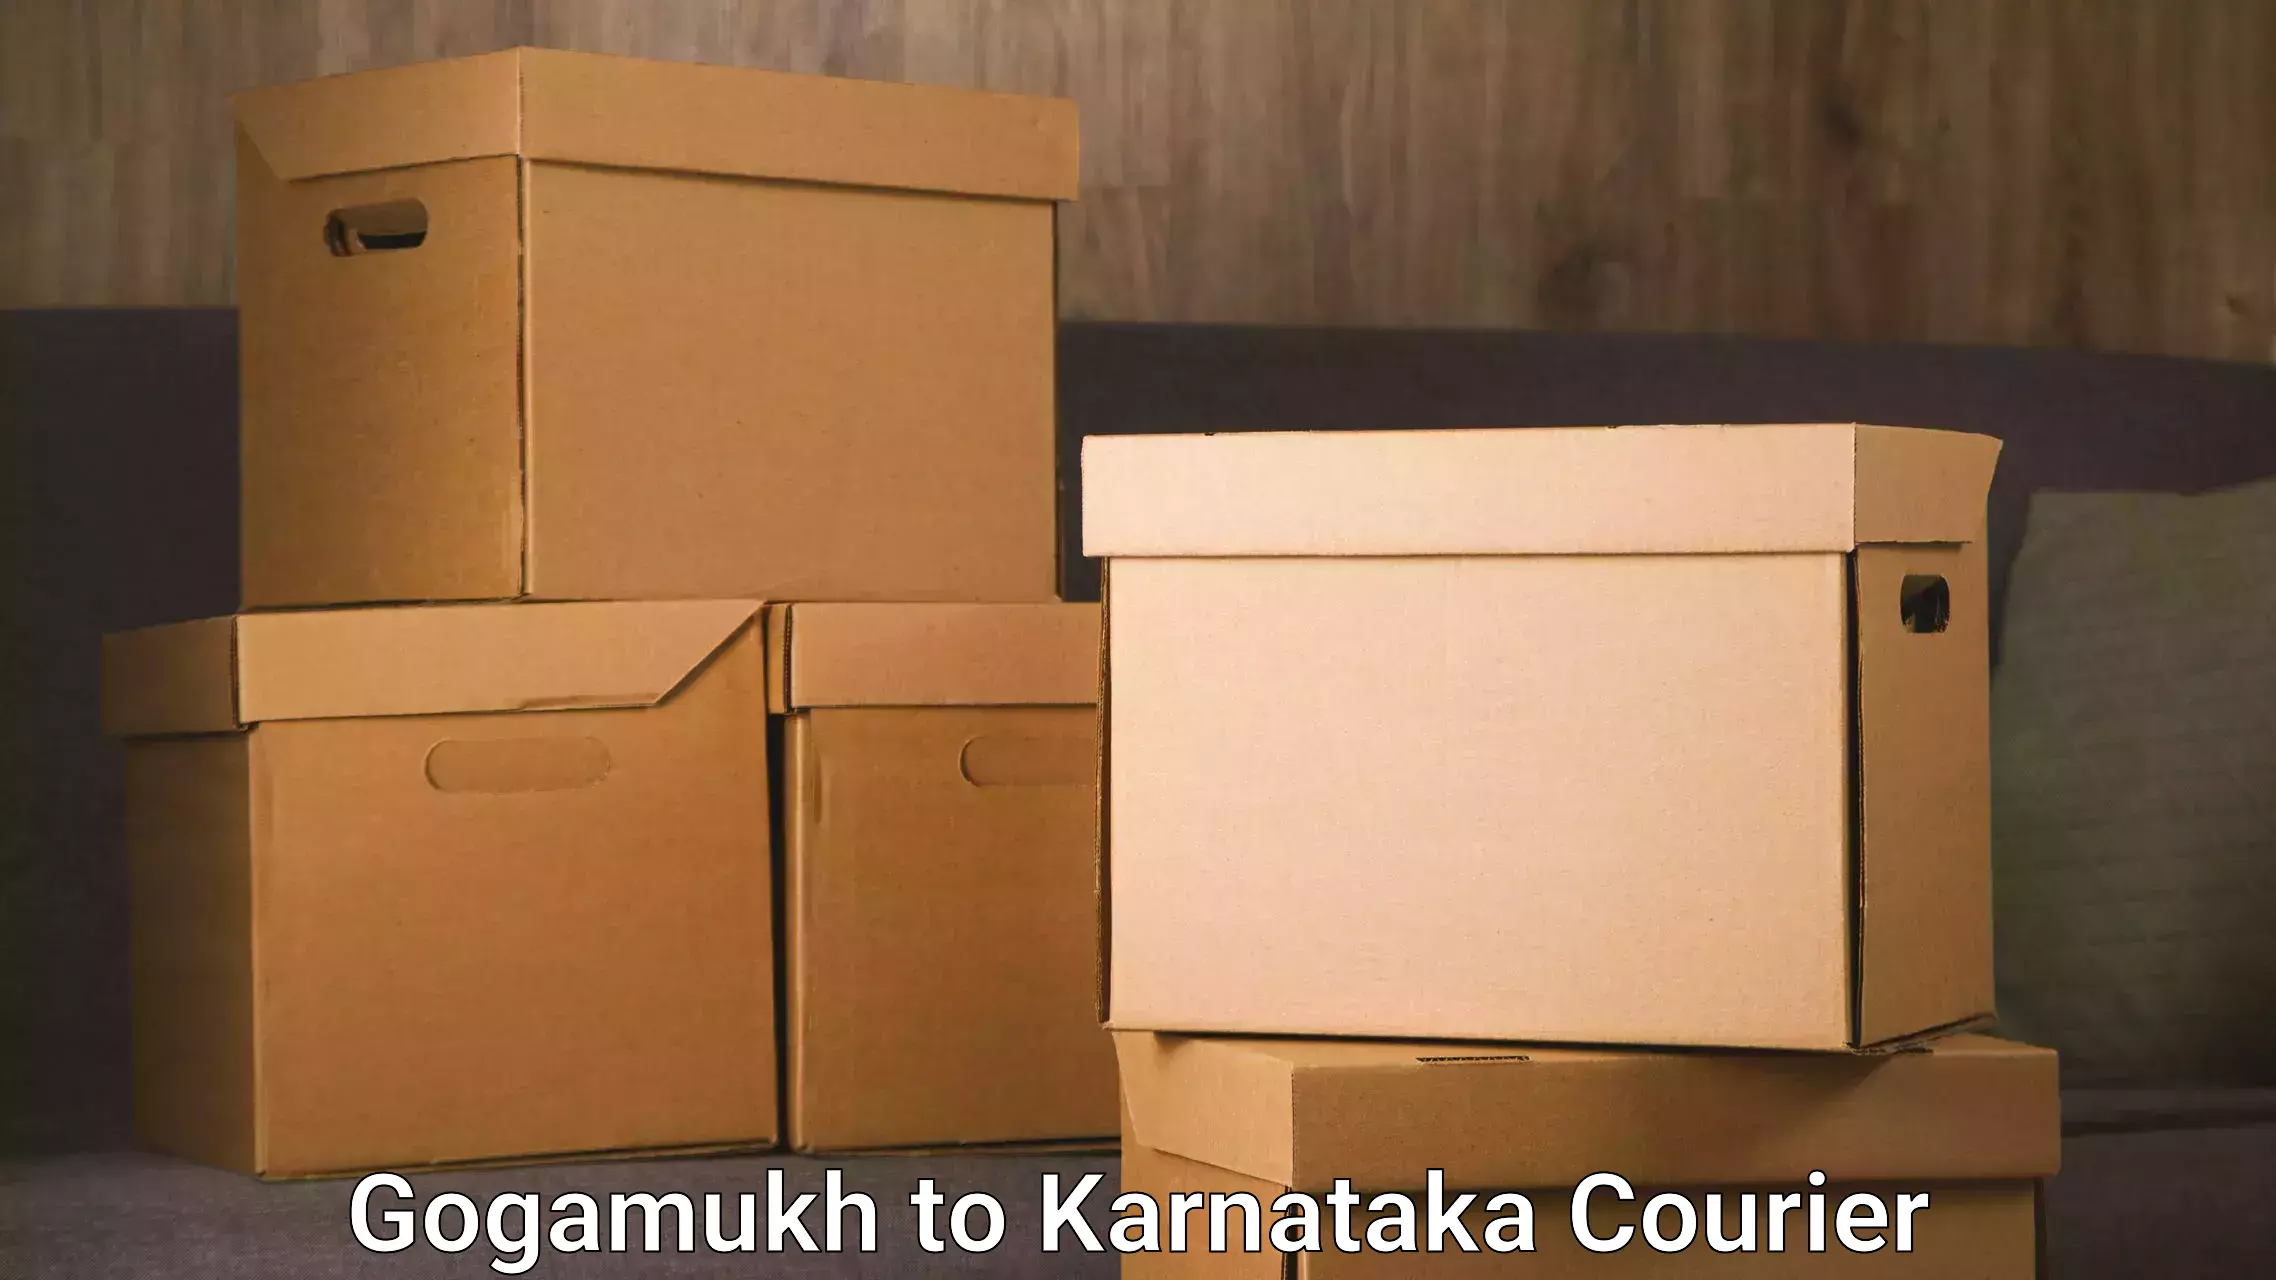 Tech-enabled shipping Gogamukh to Karnataka